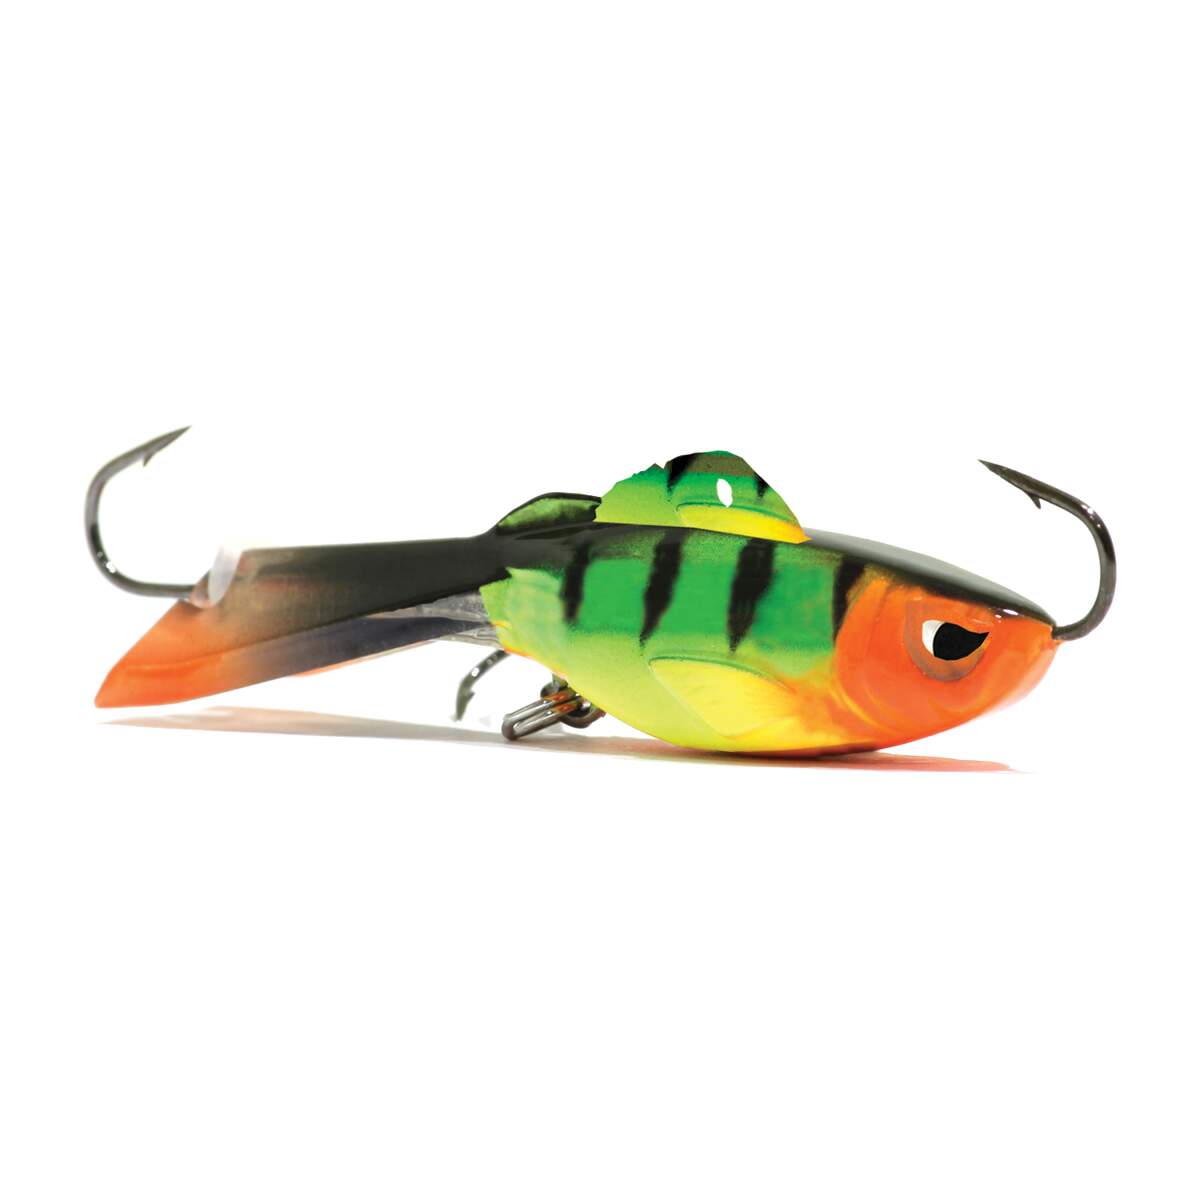 Acme Hyper-Rattle 0.59 oz. (2) - Fire tiger - Precision Fishing